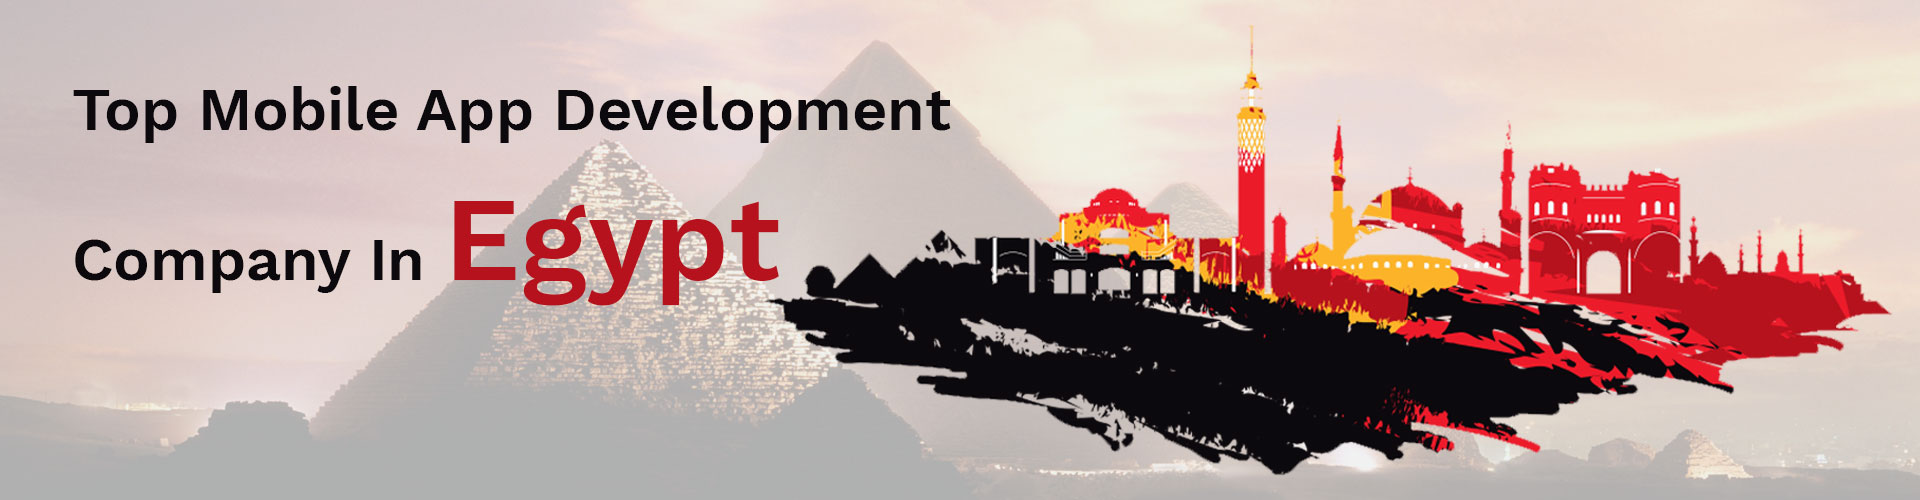 mobile app development company egypt